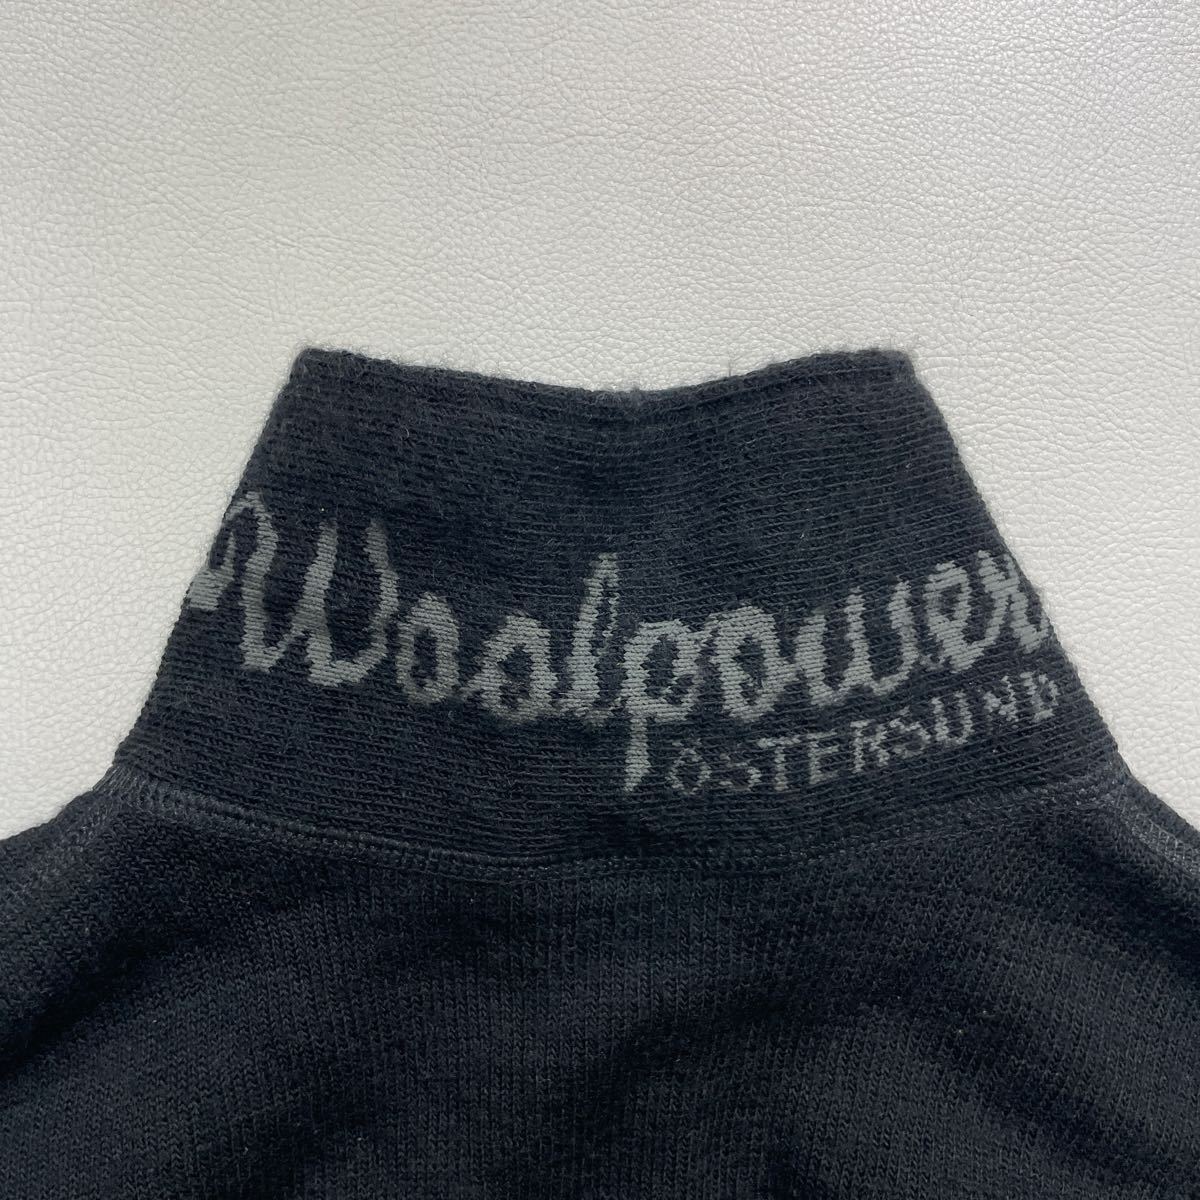 262 Woolpower ウールパワー スウェーデン製 ジップアップ フリース ベスト ストレッチ ロゴ刺繍 アウトドア キャンプ ブラック 黒 40219K_画像6